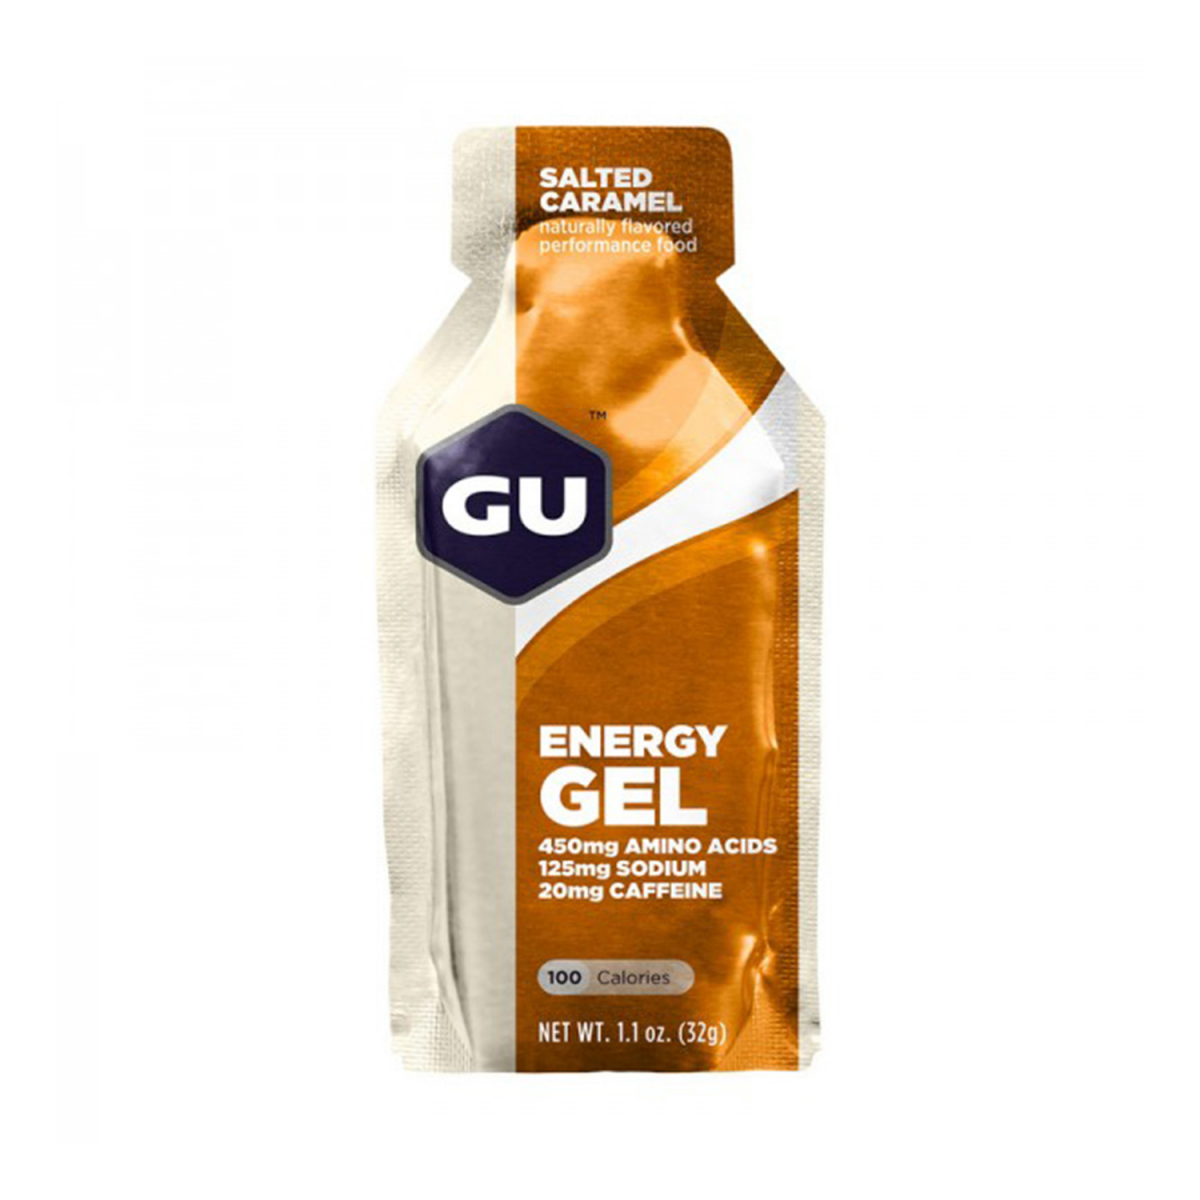 GU - ENERGY GEL - SALTED CARAMEL (20 MG CAFFEINE)